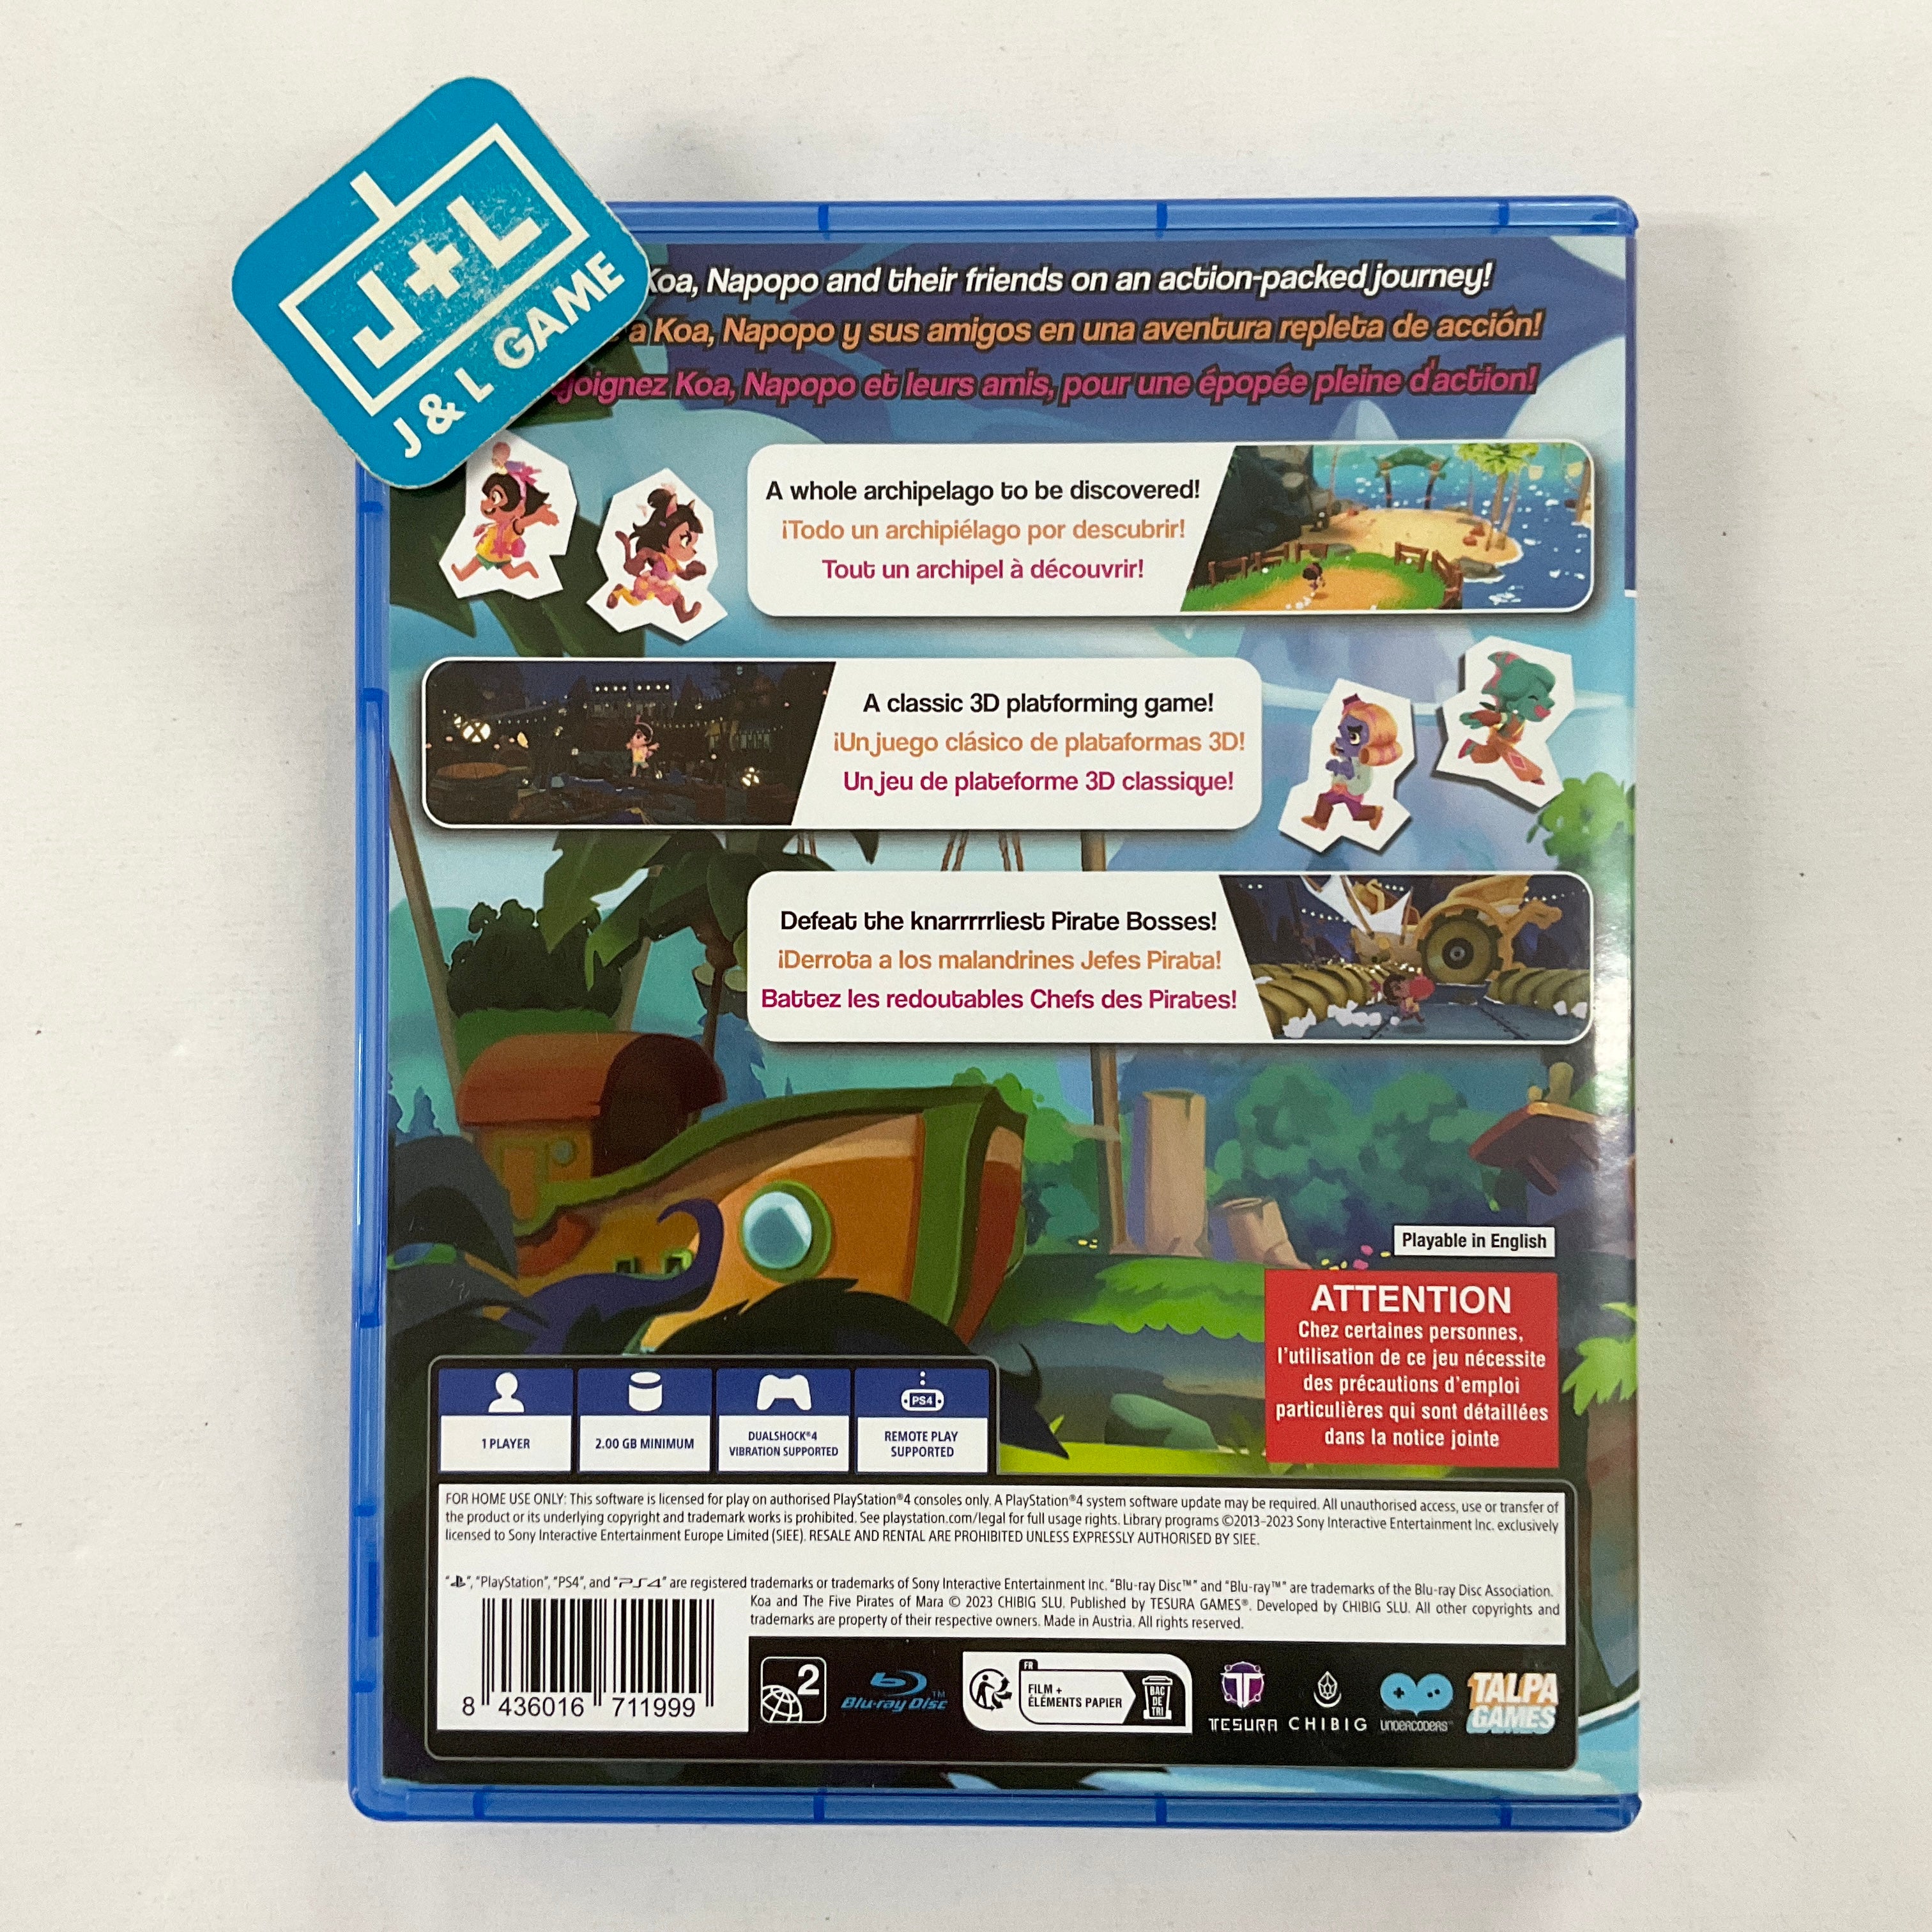 Koa and the Five Pirates of Mara - (PS4) PlayStation 4 [Pre-Owned] (European Import) Video Games Tesura Games   